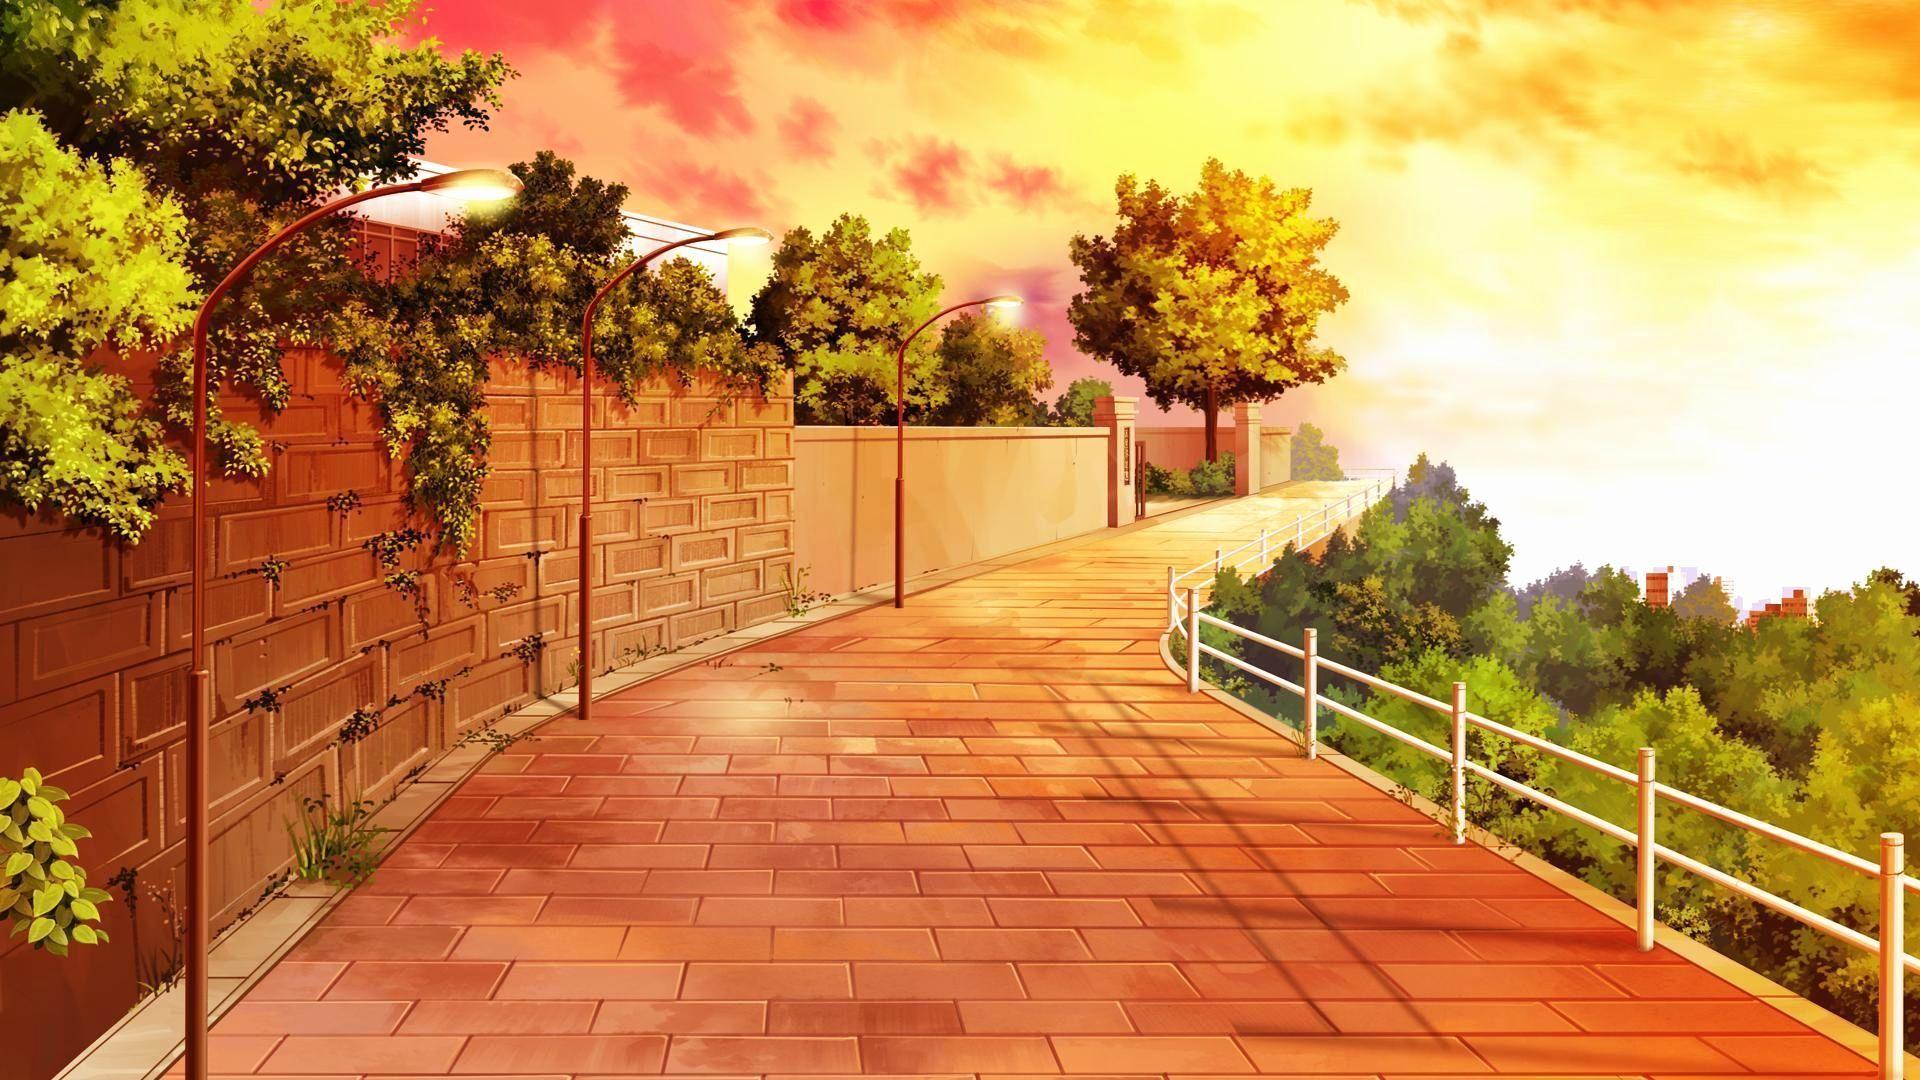 live anime scenery wallpaper